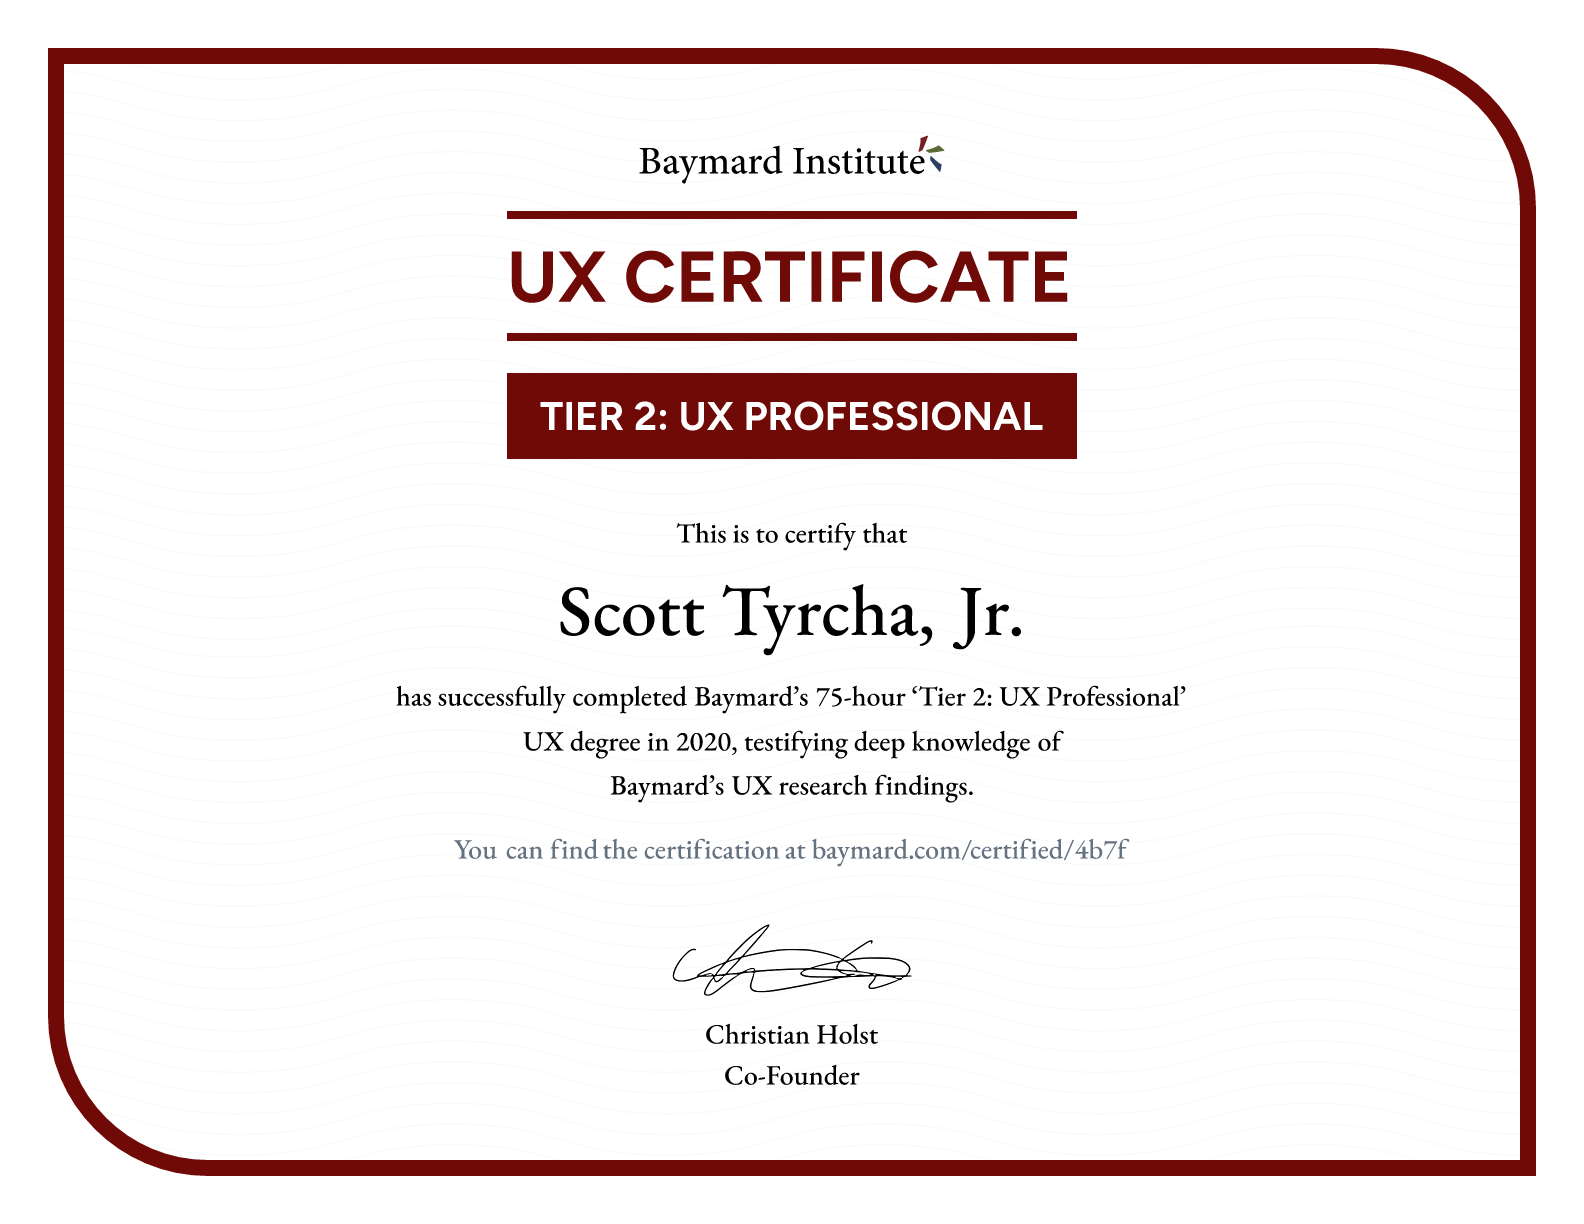 Scott Tyrcha, Jr.’s certificate